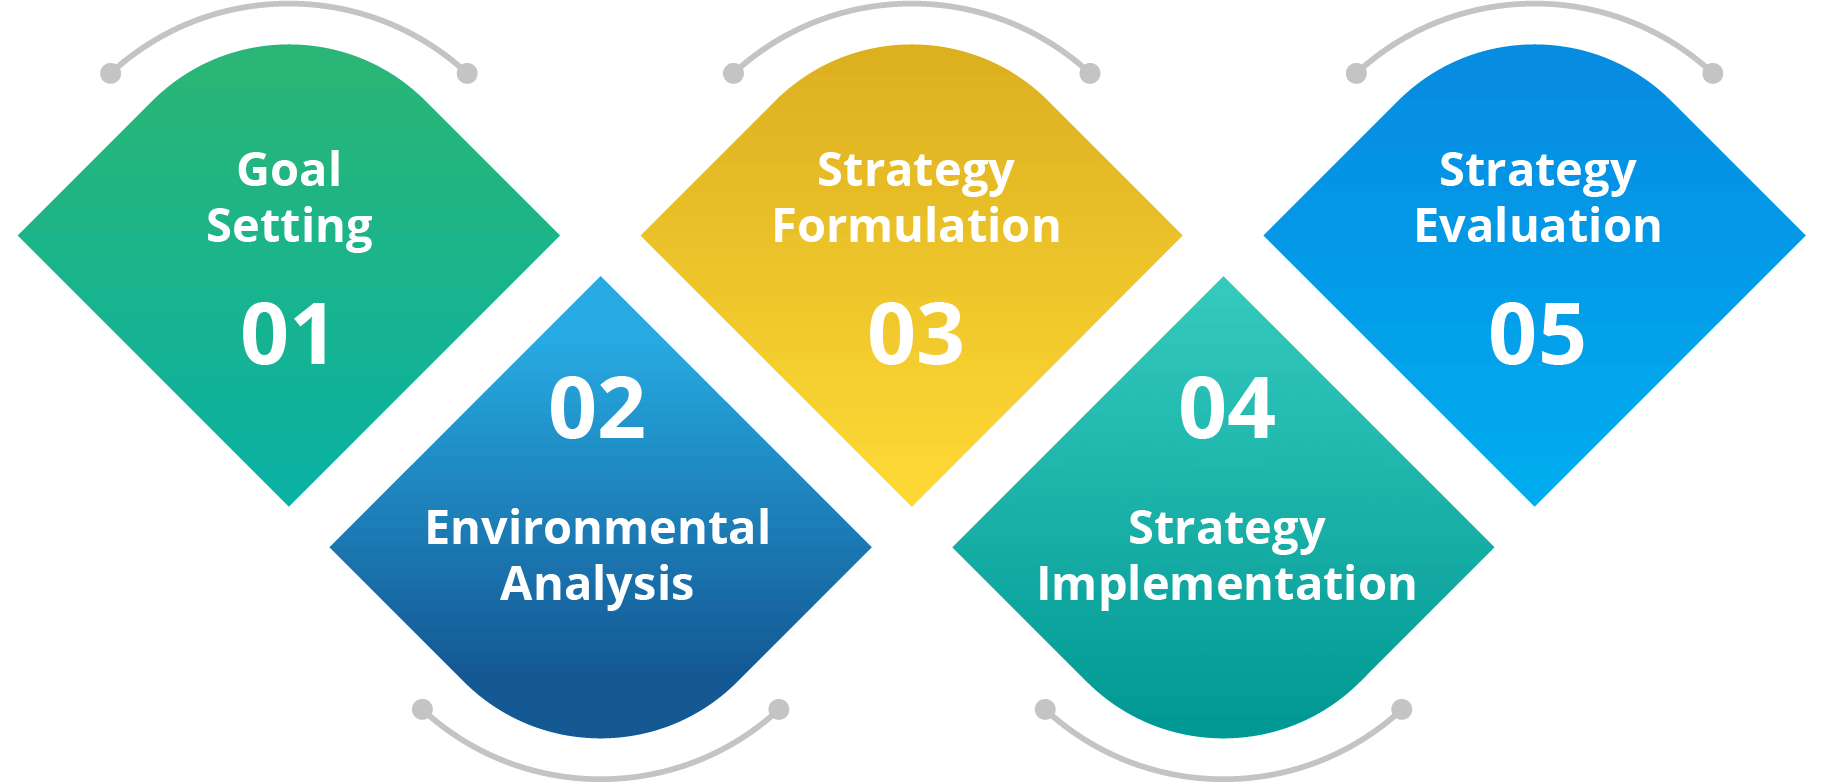 Implementing Balanced Scorecard for Strategic Planning